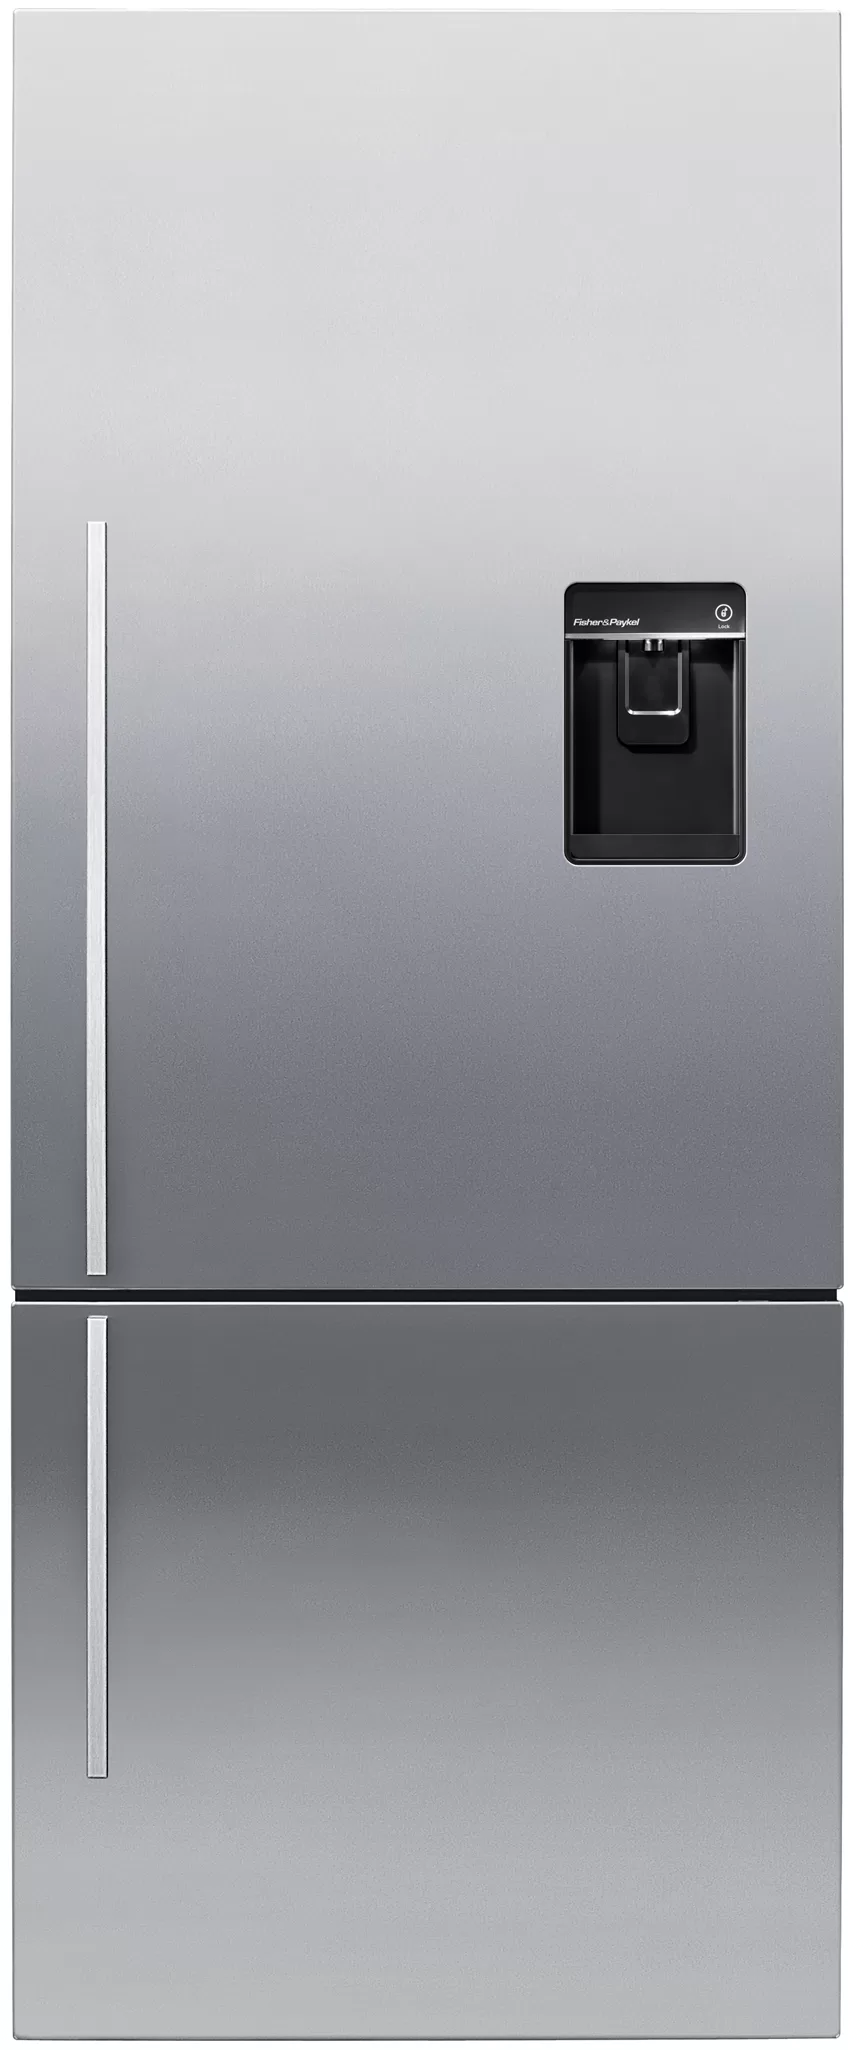 680mm Bottom Freezer with Ice & Water dispenser